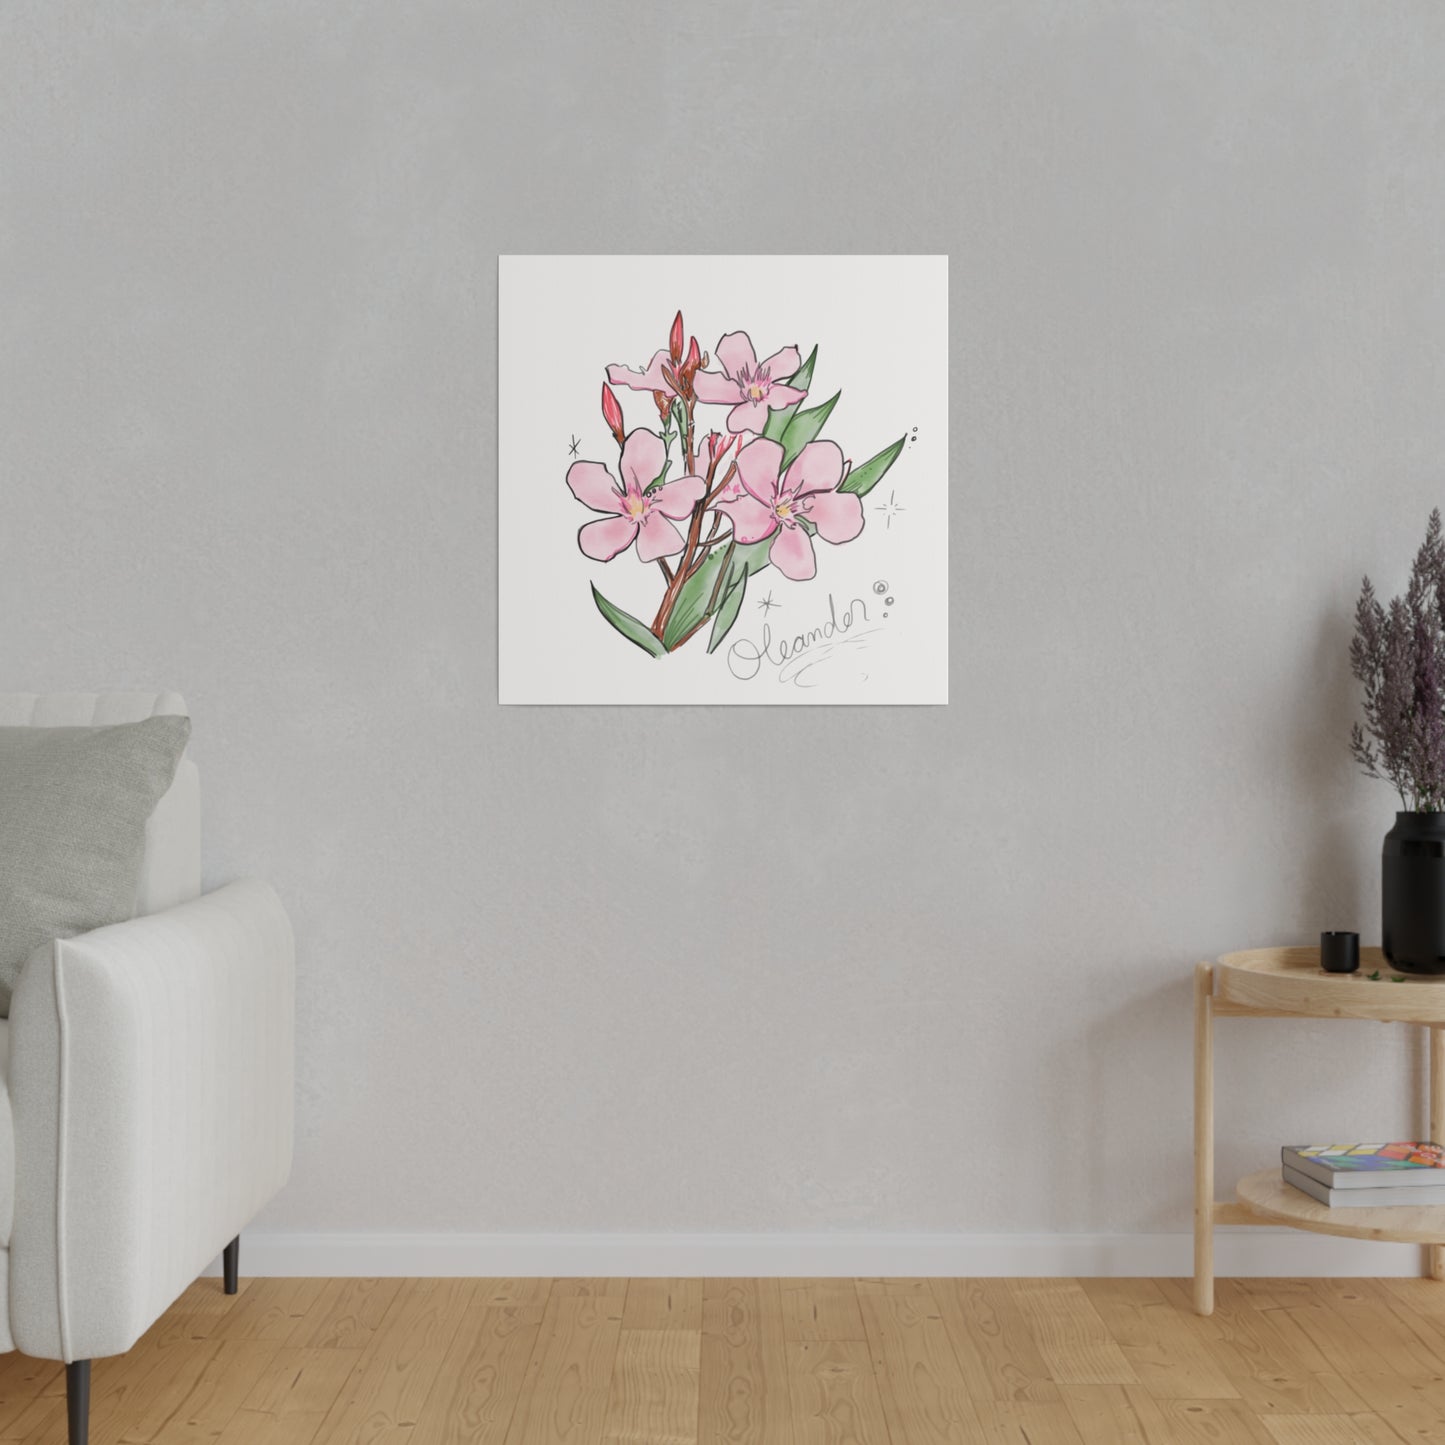 Pink Floral Oleander Watercolor inspired Illustration on Canvas